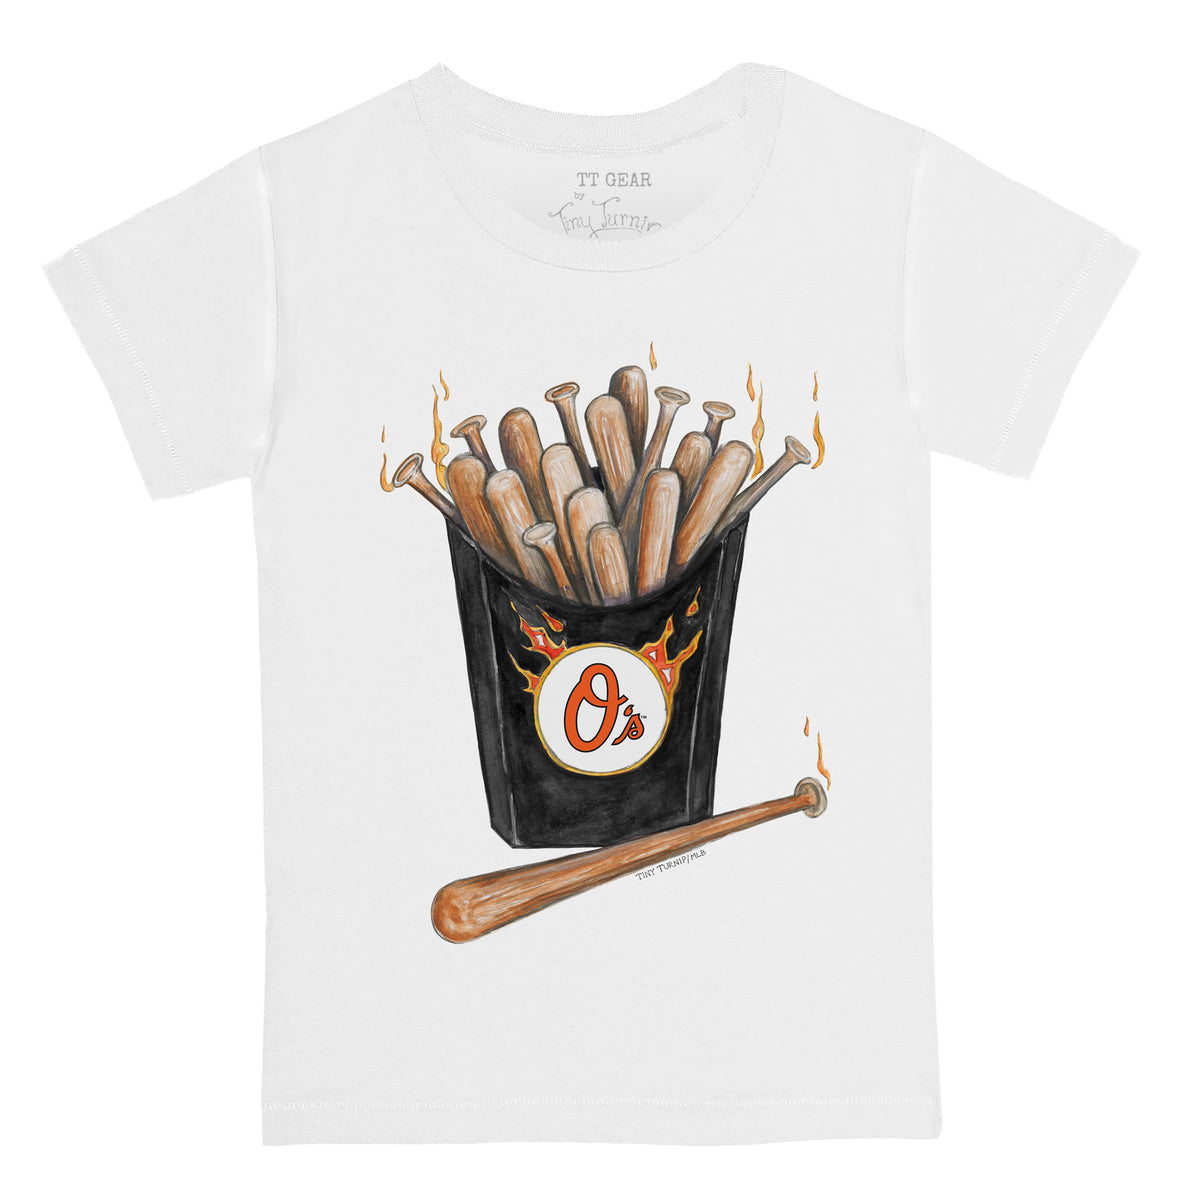 Baltimore Orioles Hot Bats Tee Shirt